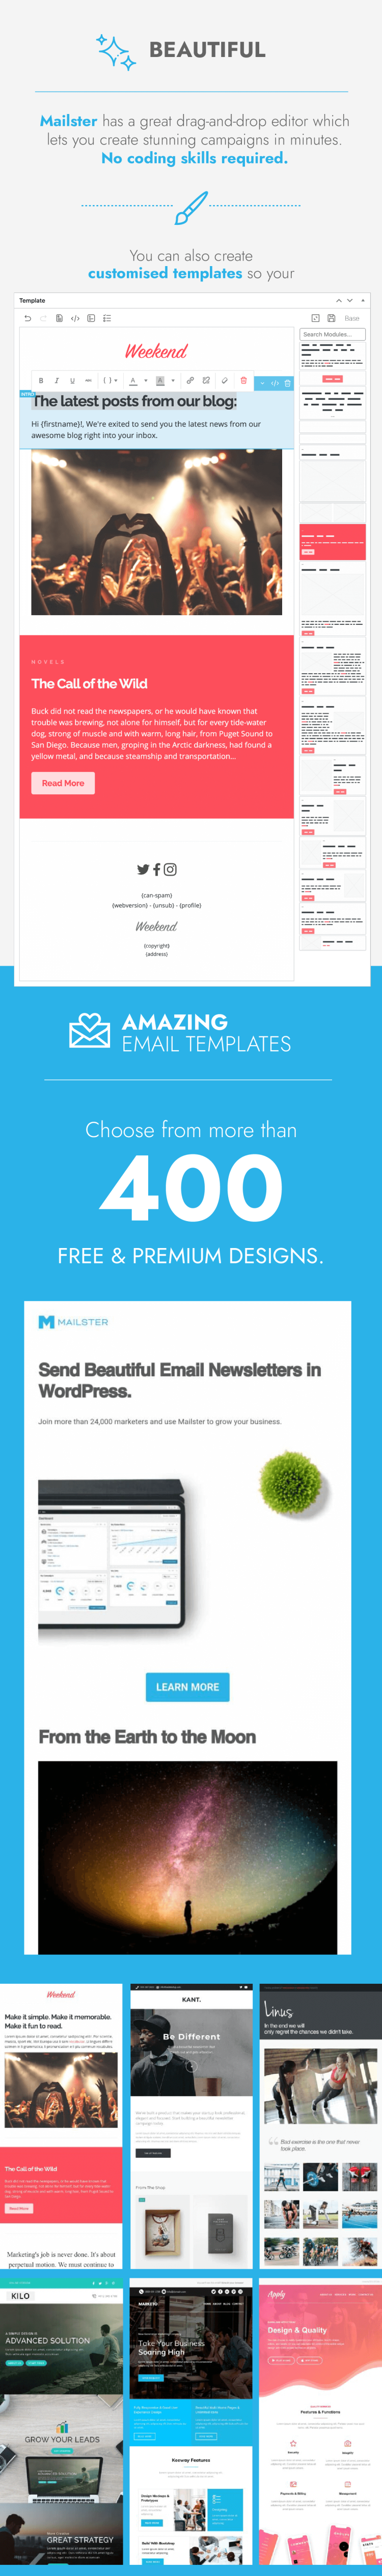 Email Newsletter Plugin for WordPress